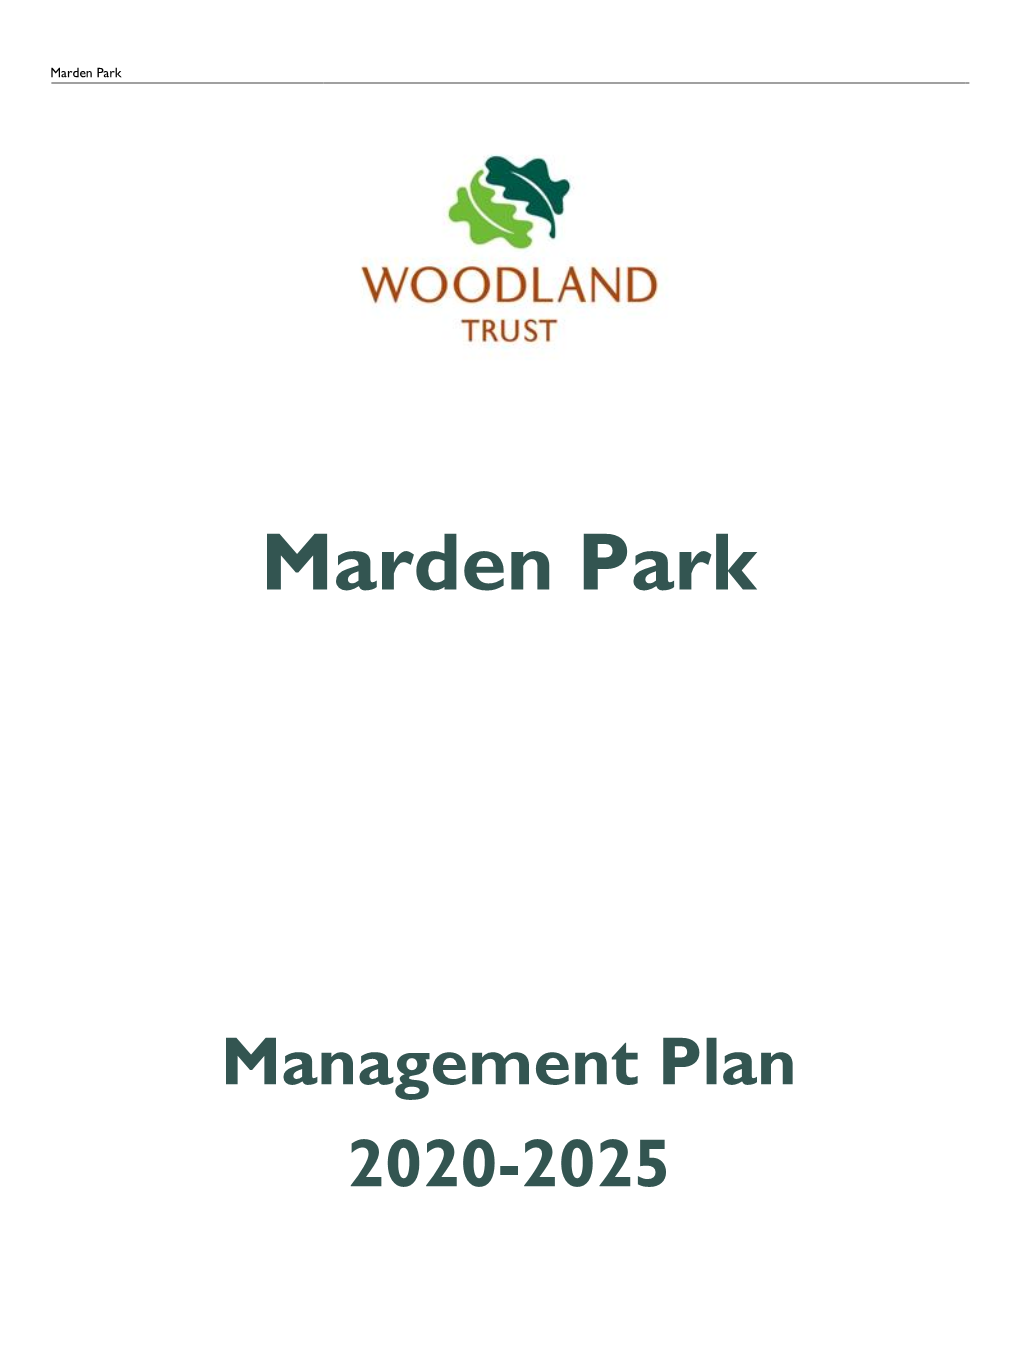 Download Marden Park Management Plan